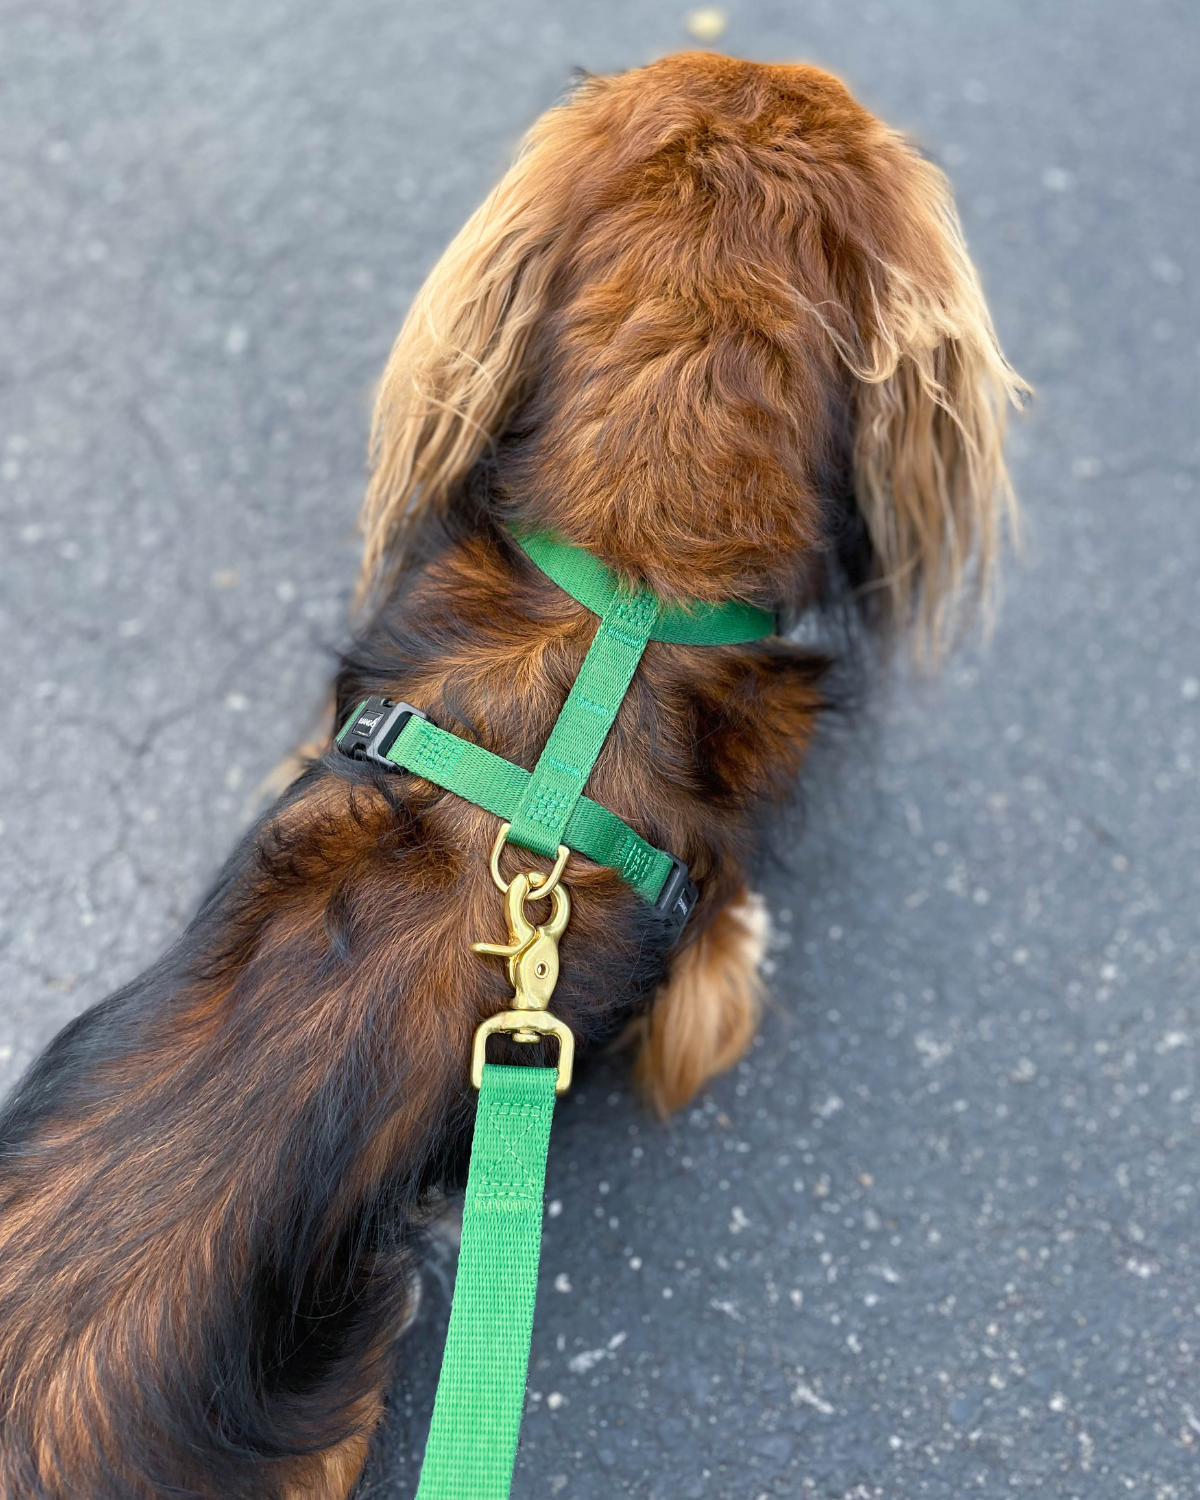 DJANGO's Adventure Dog Leash pairs perfectly with your favorite DJANGO dog harness -  djangobrand.com